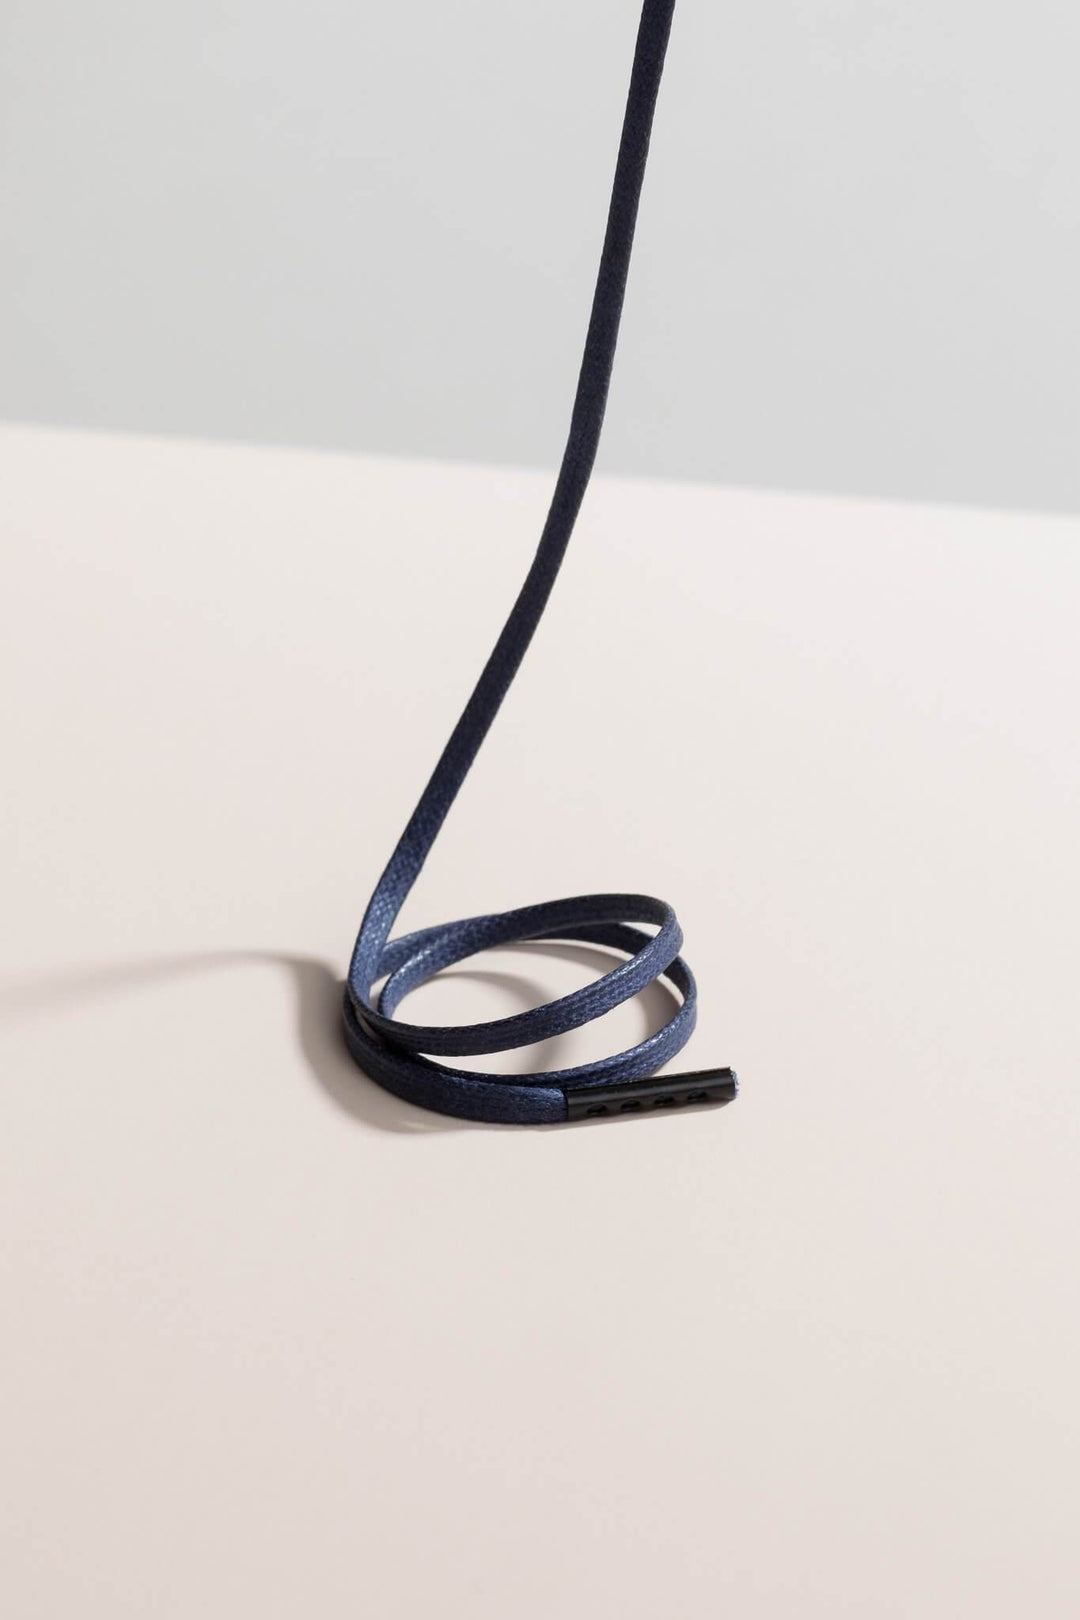 Dark Blue - 3mm Flat Waxed Shoelaces